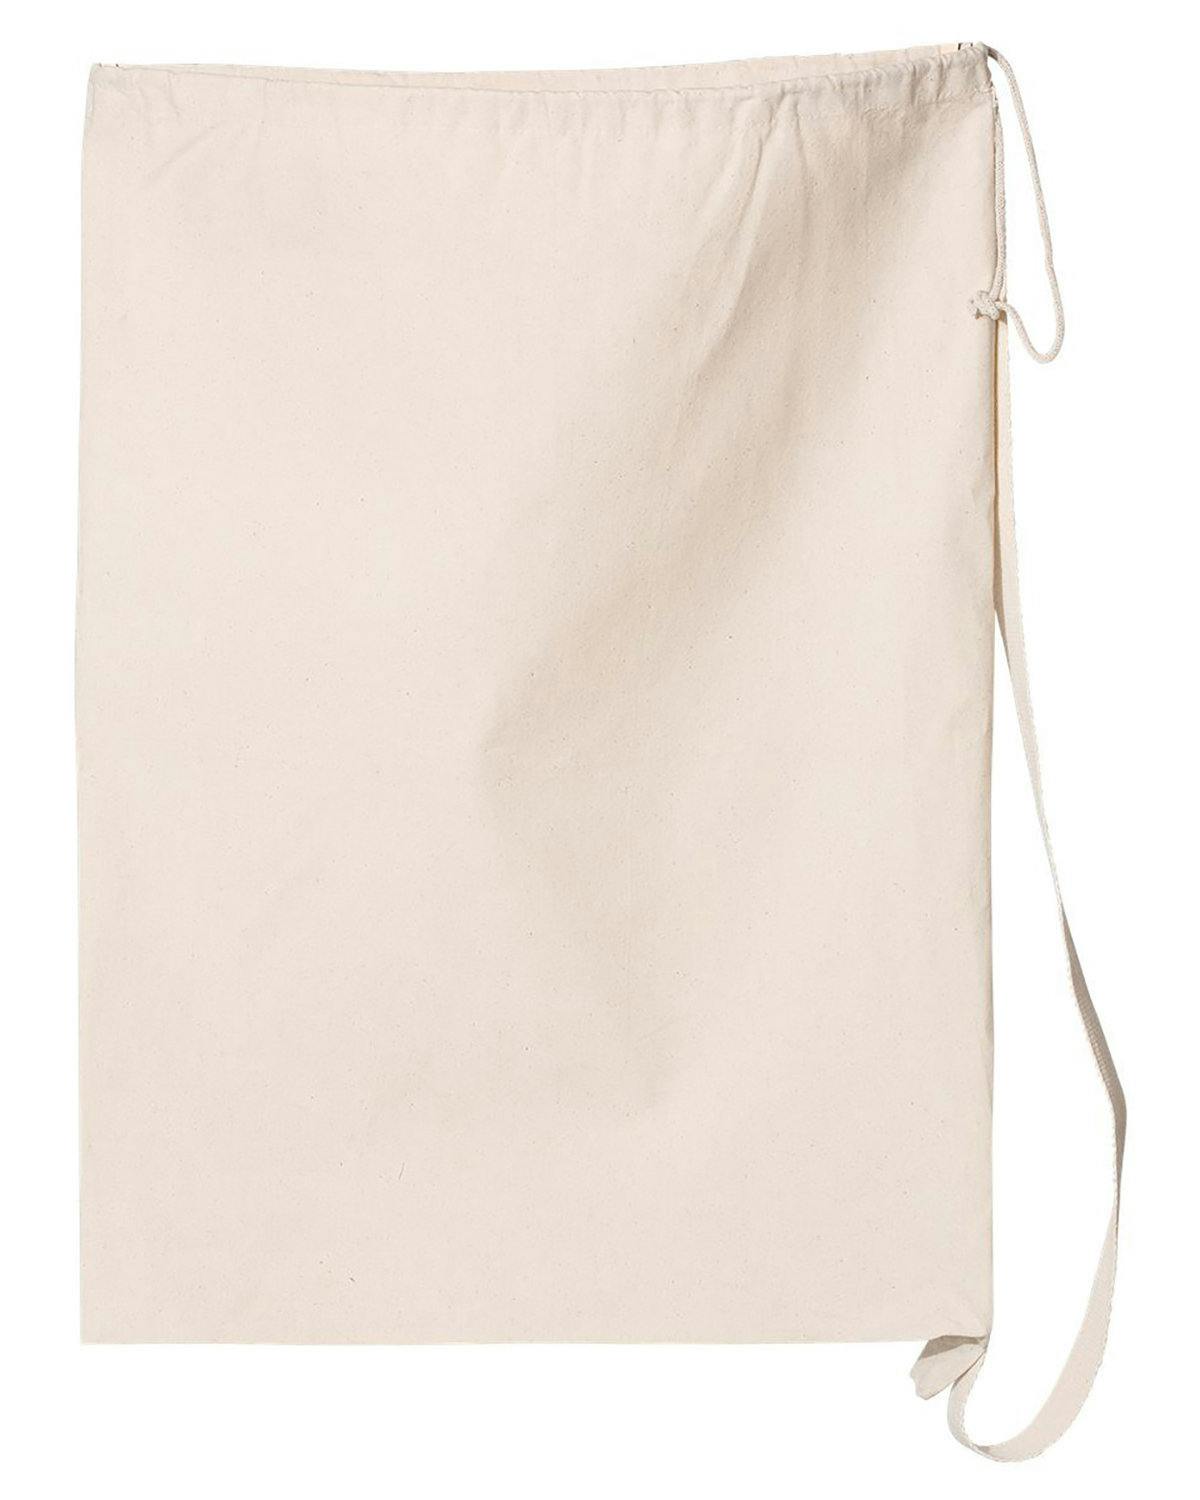 Image for Large Laundry Bag